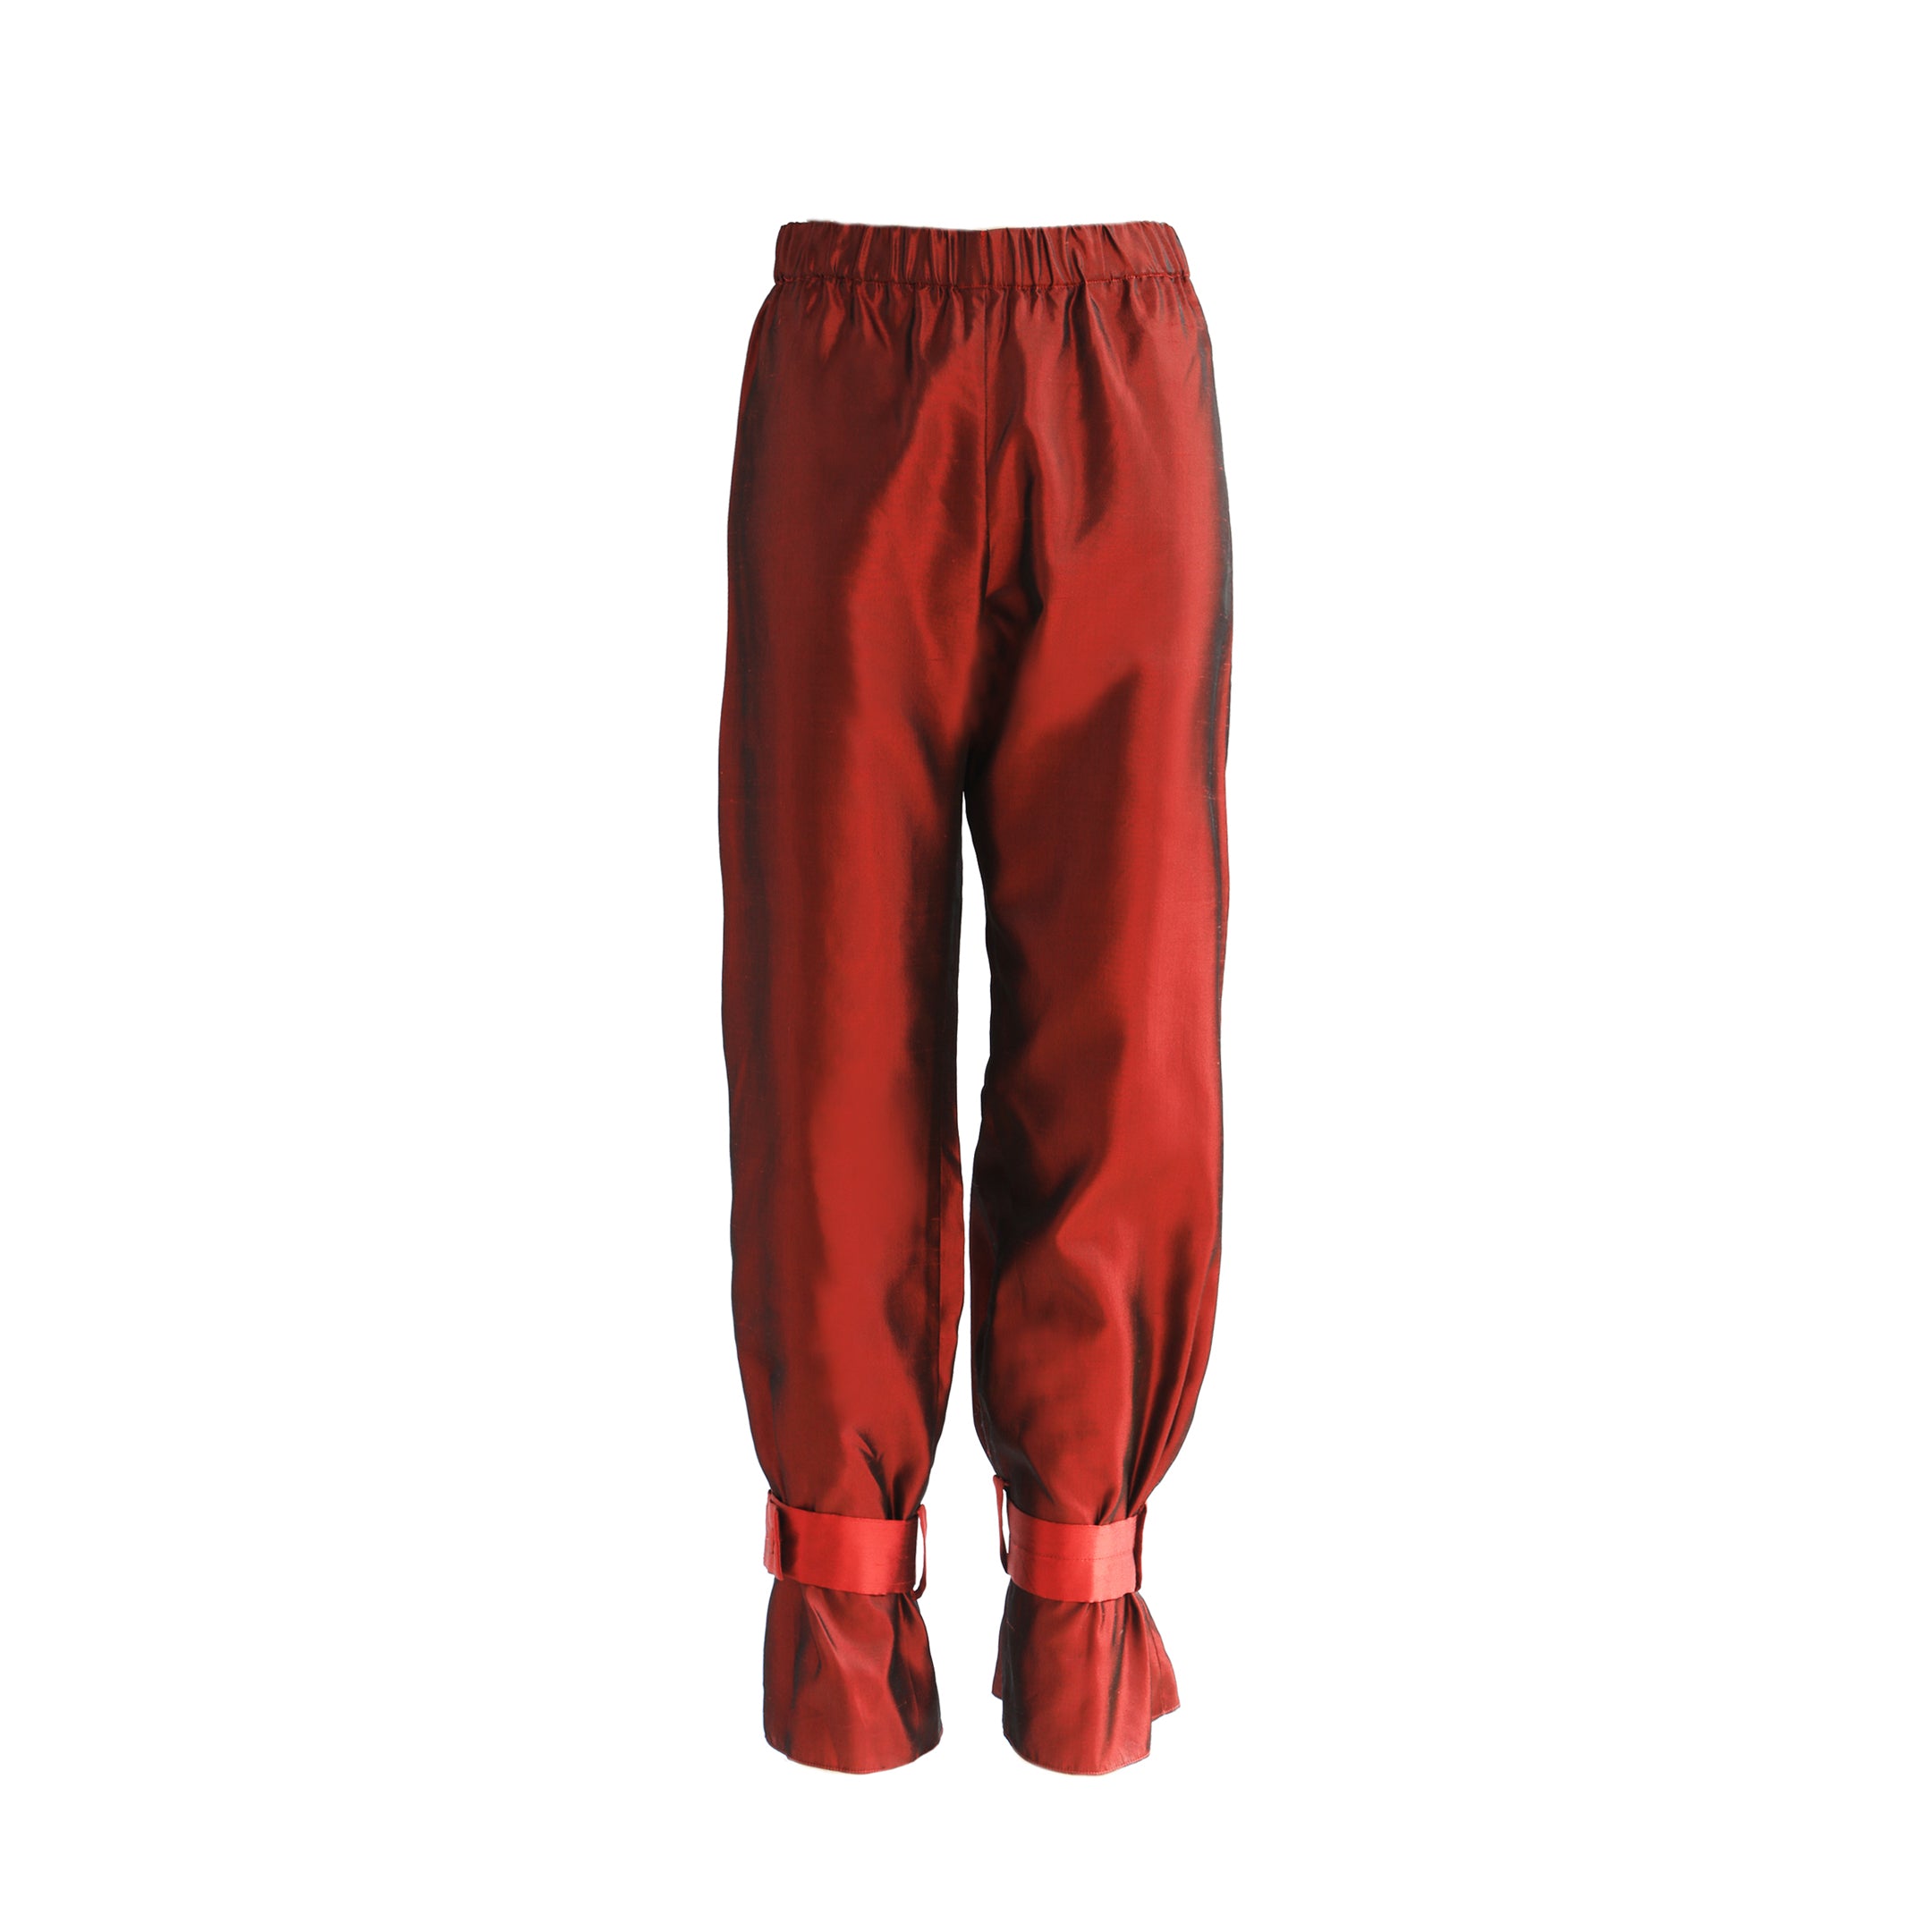 OTKUTYR - Red Tefetta Slacks, buy at DOORS NYC